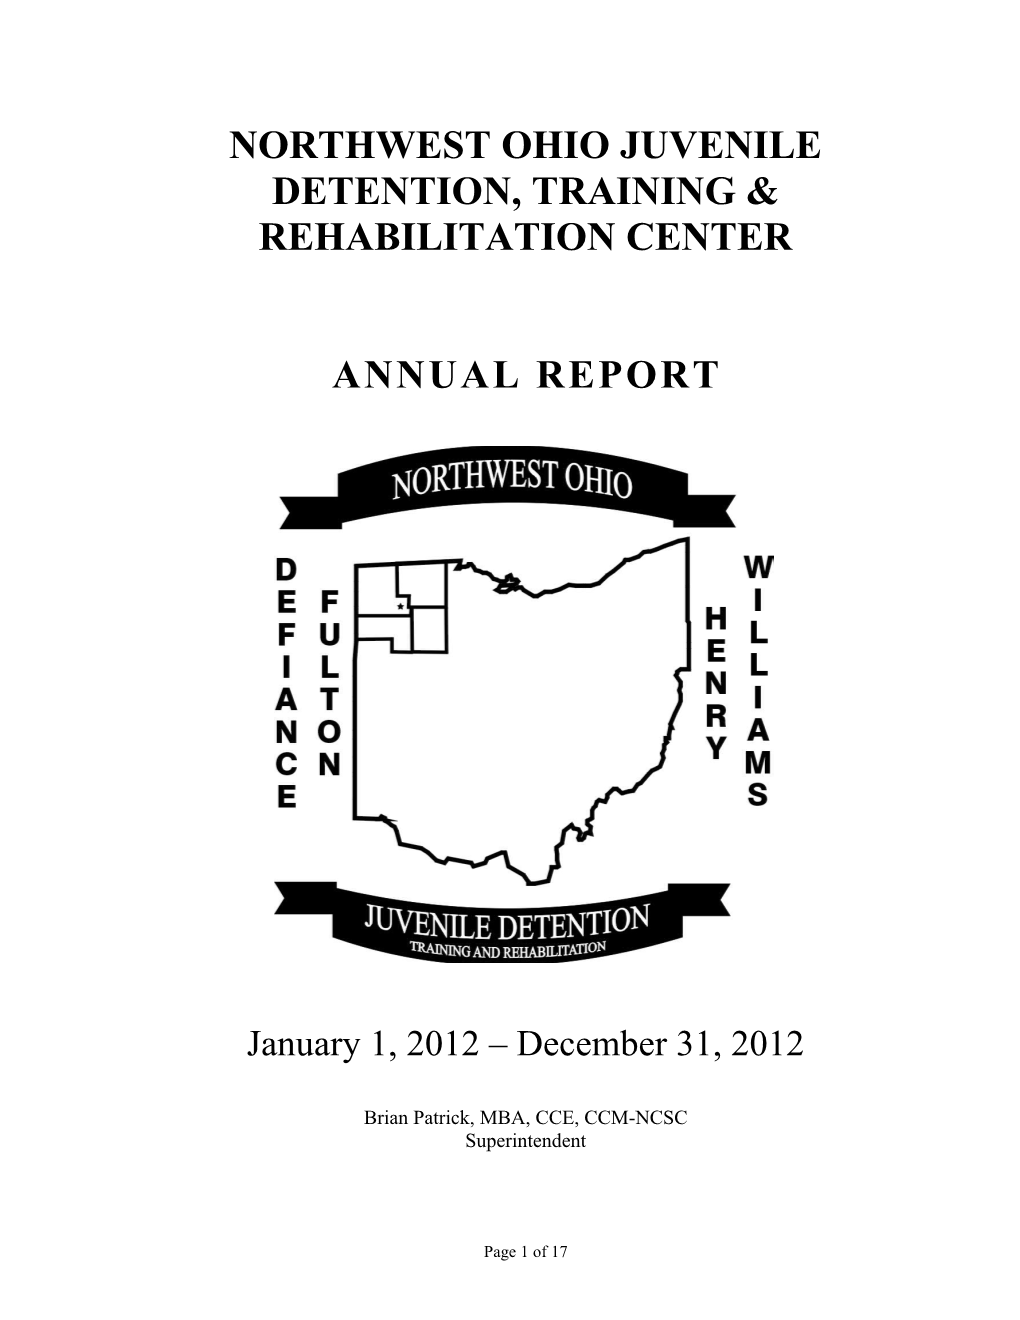 Northwest Ohio Juvenile Detention, Training & Rehabilitation Center